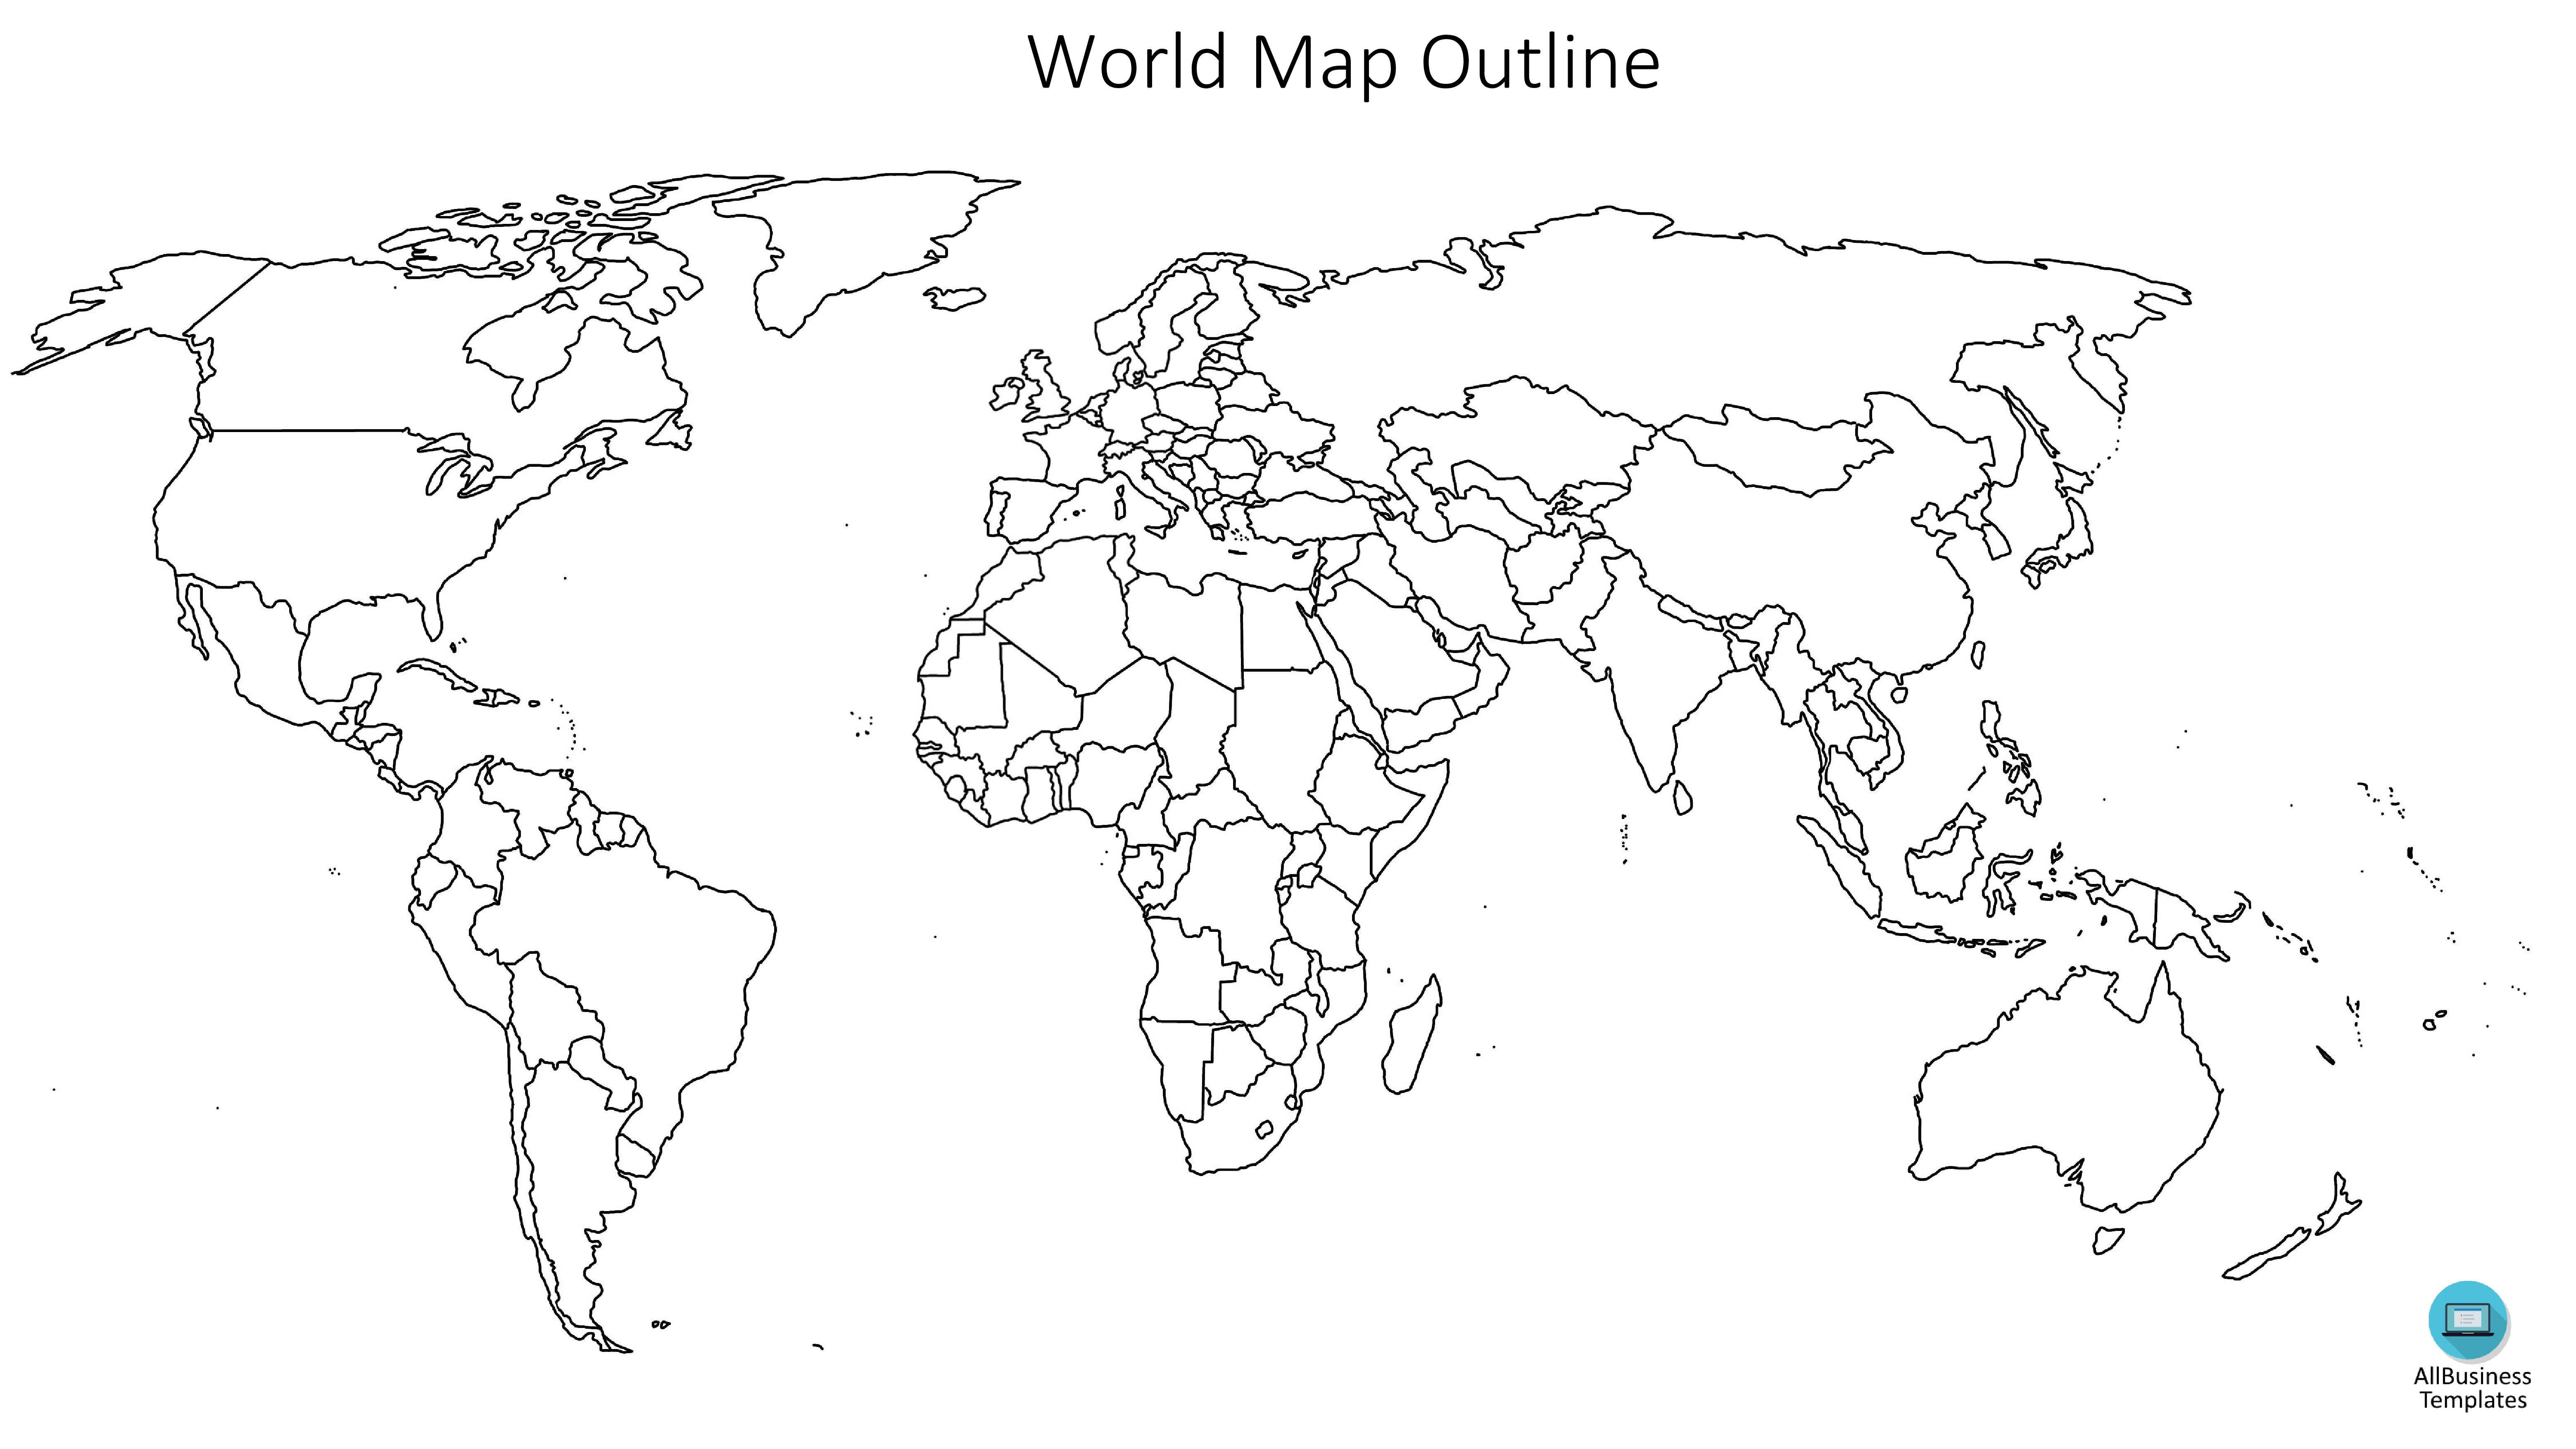 World Map Outline Templates At Allbusinesstemplates Com